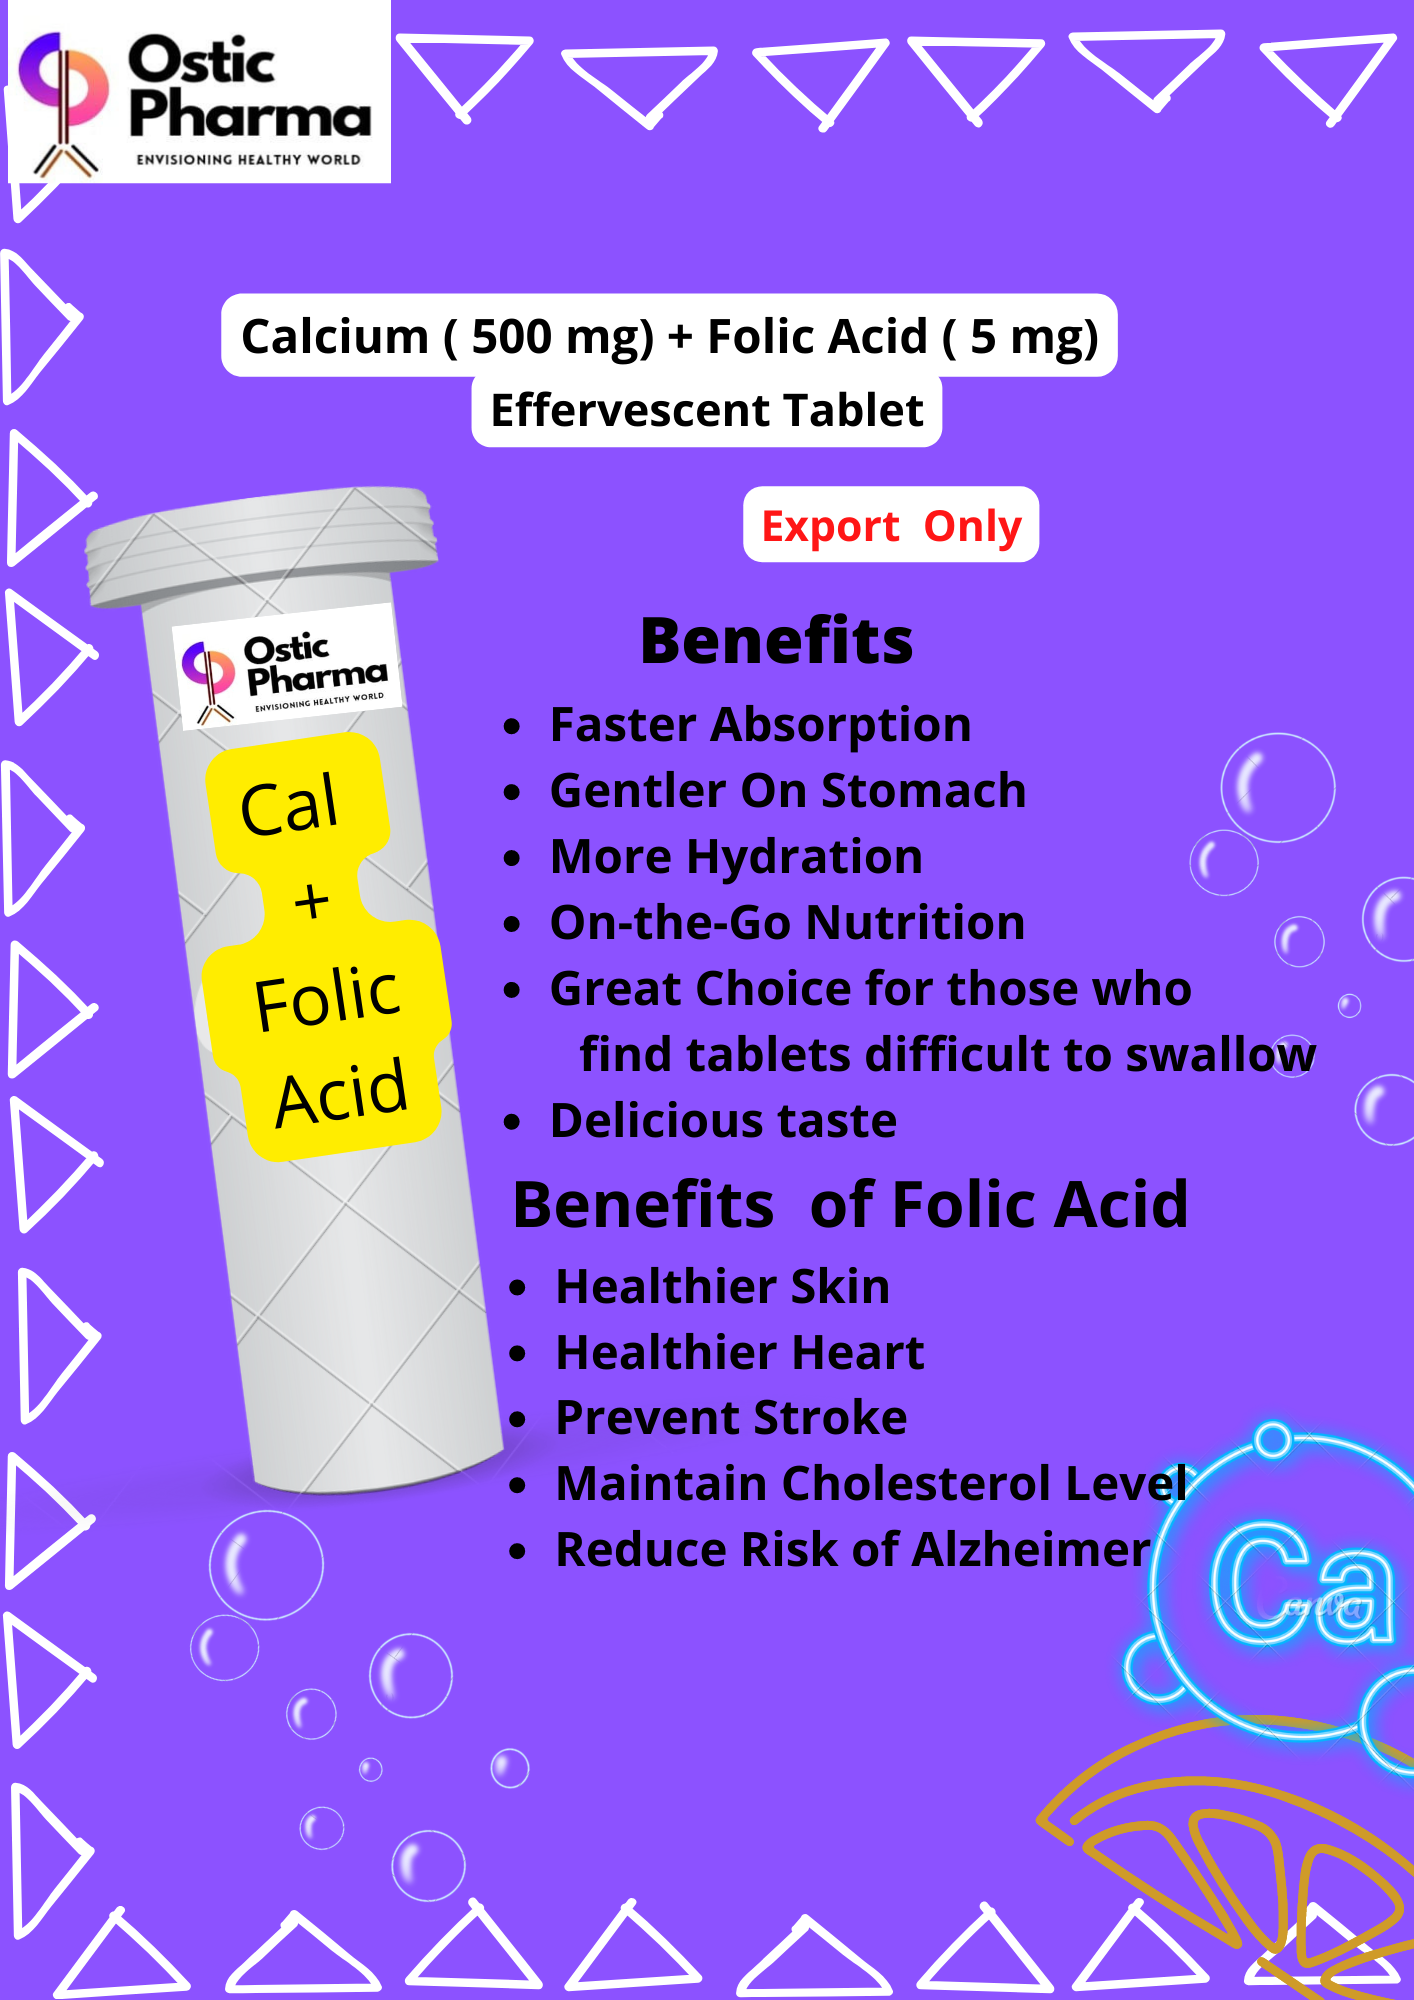 calcium + Folic Acid Effervescent Tablets for Export